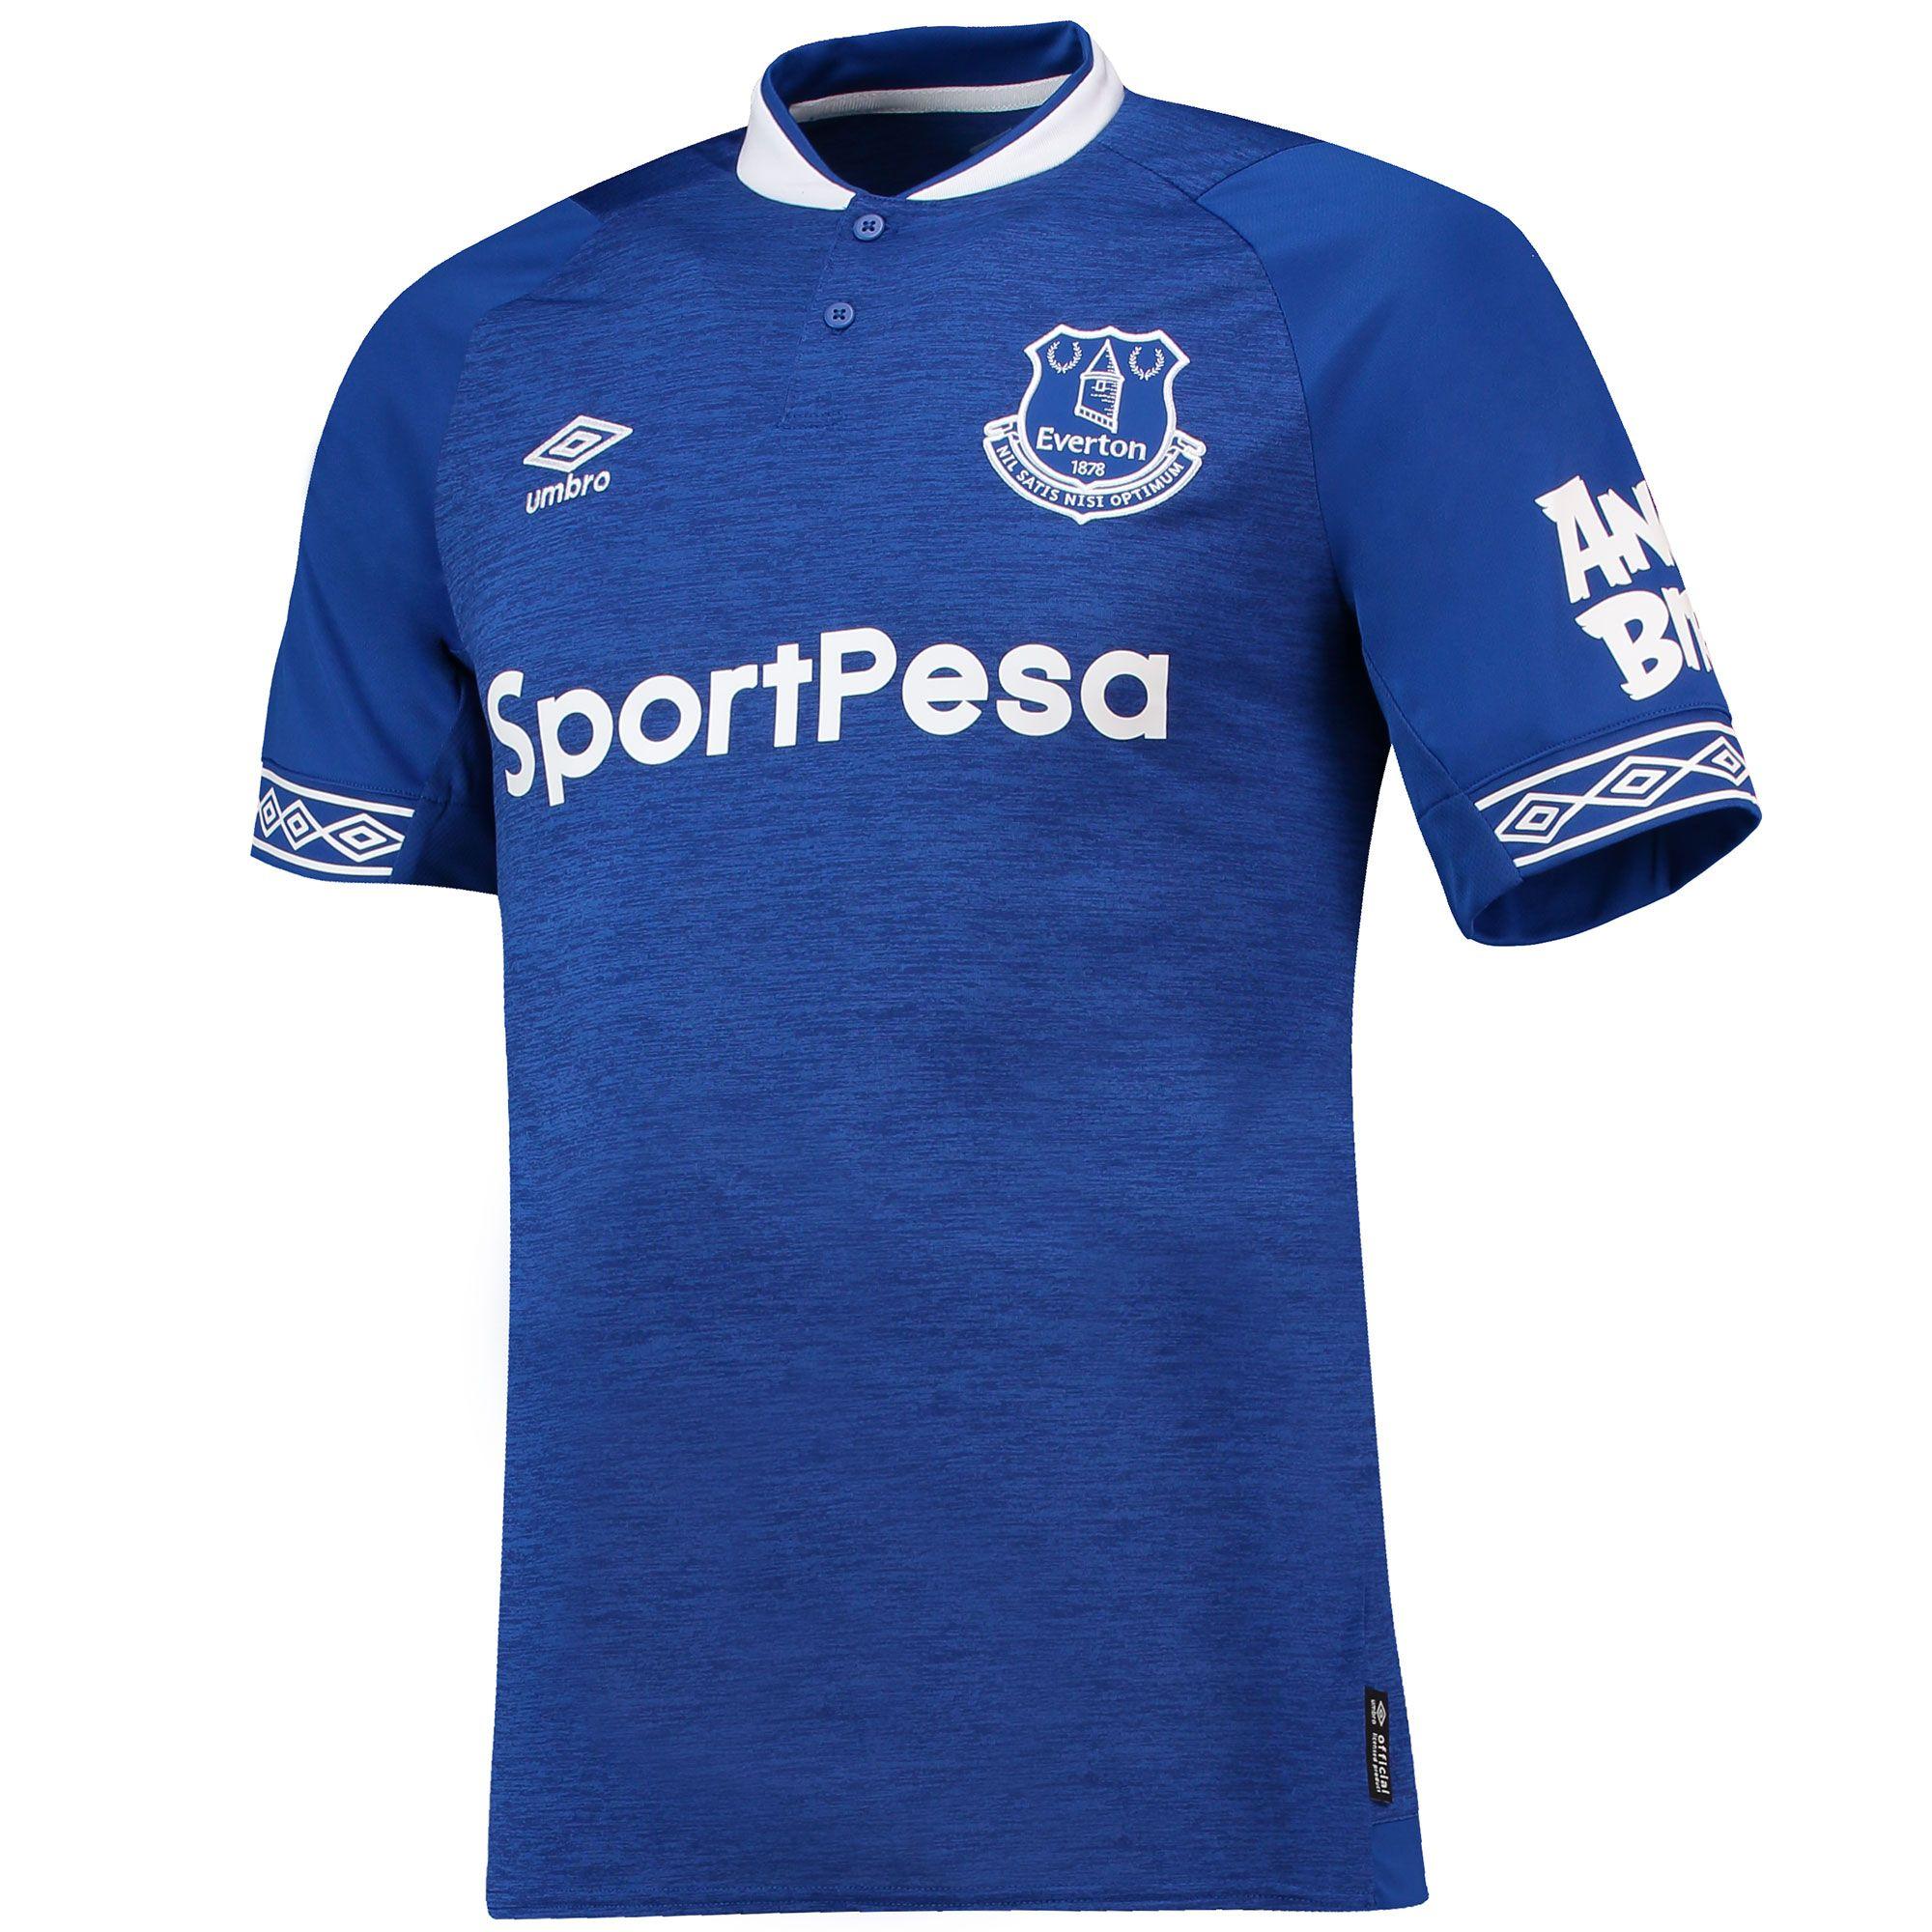 Umbro Old Logo - Everton 2018/19 Umbro Home Kit | 18/19 Kits | Football shirt blog